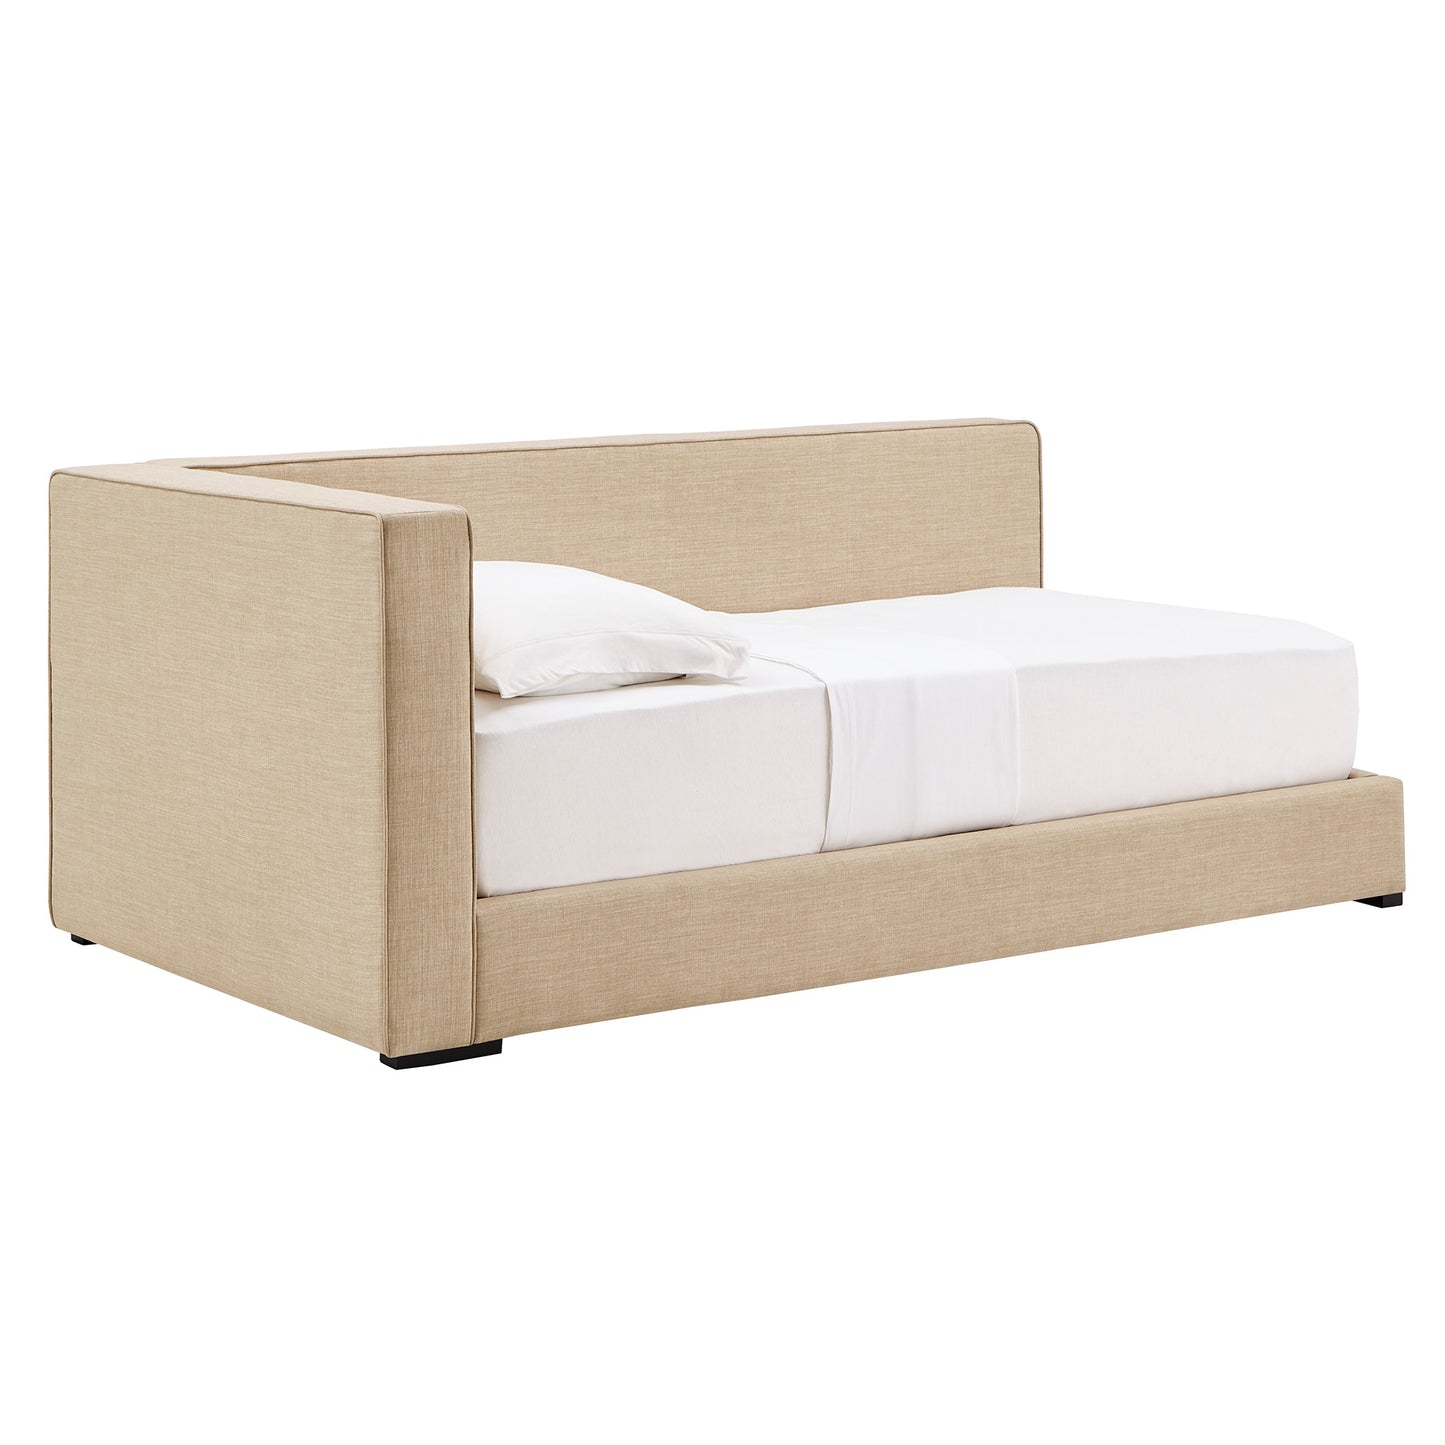 Corner Lounge Bed - Beige Linen, Twin